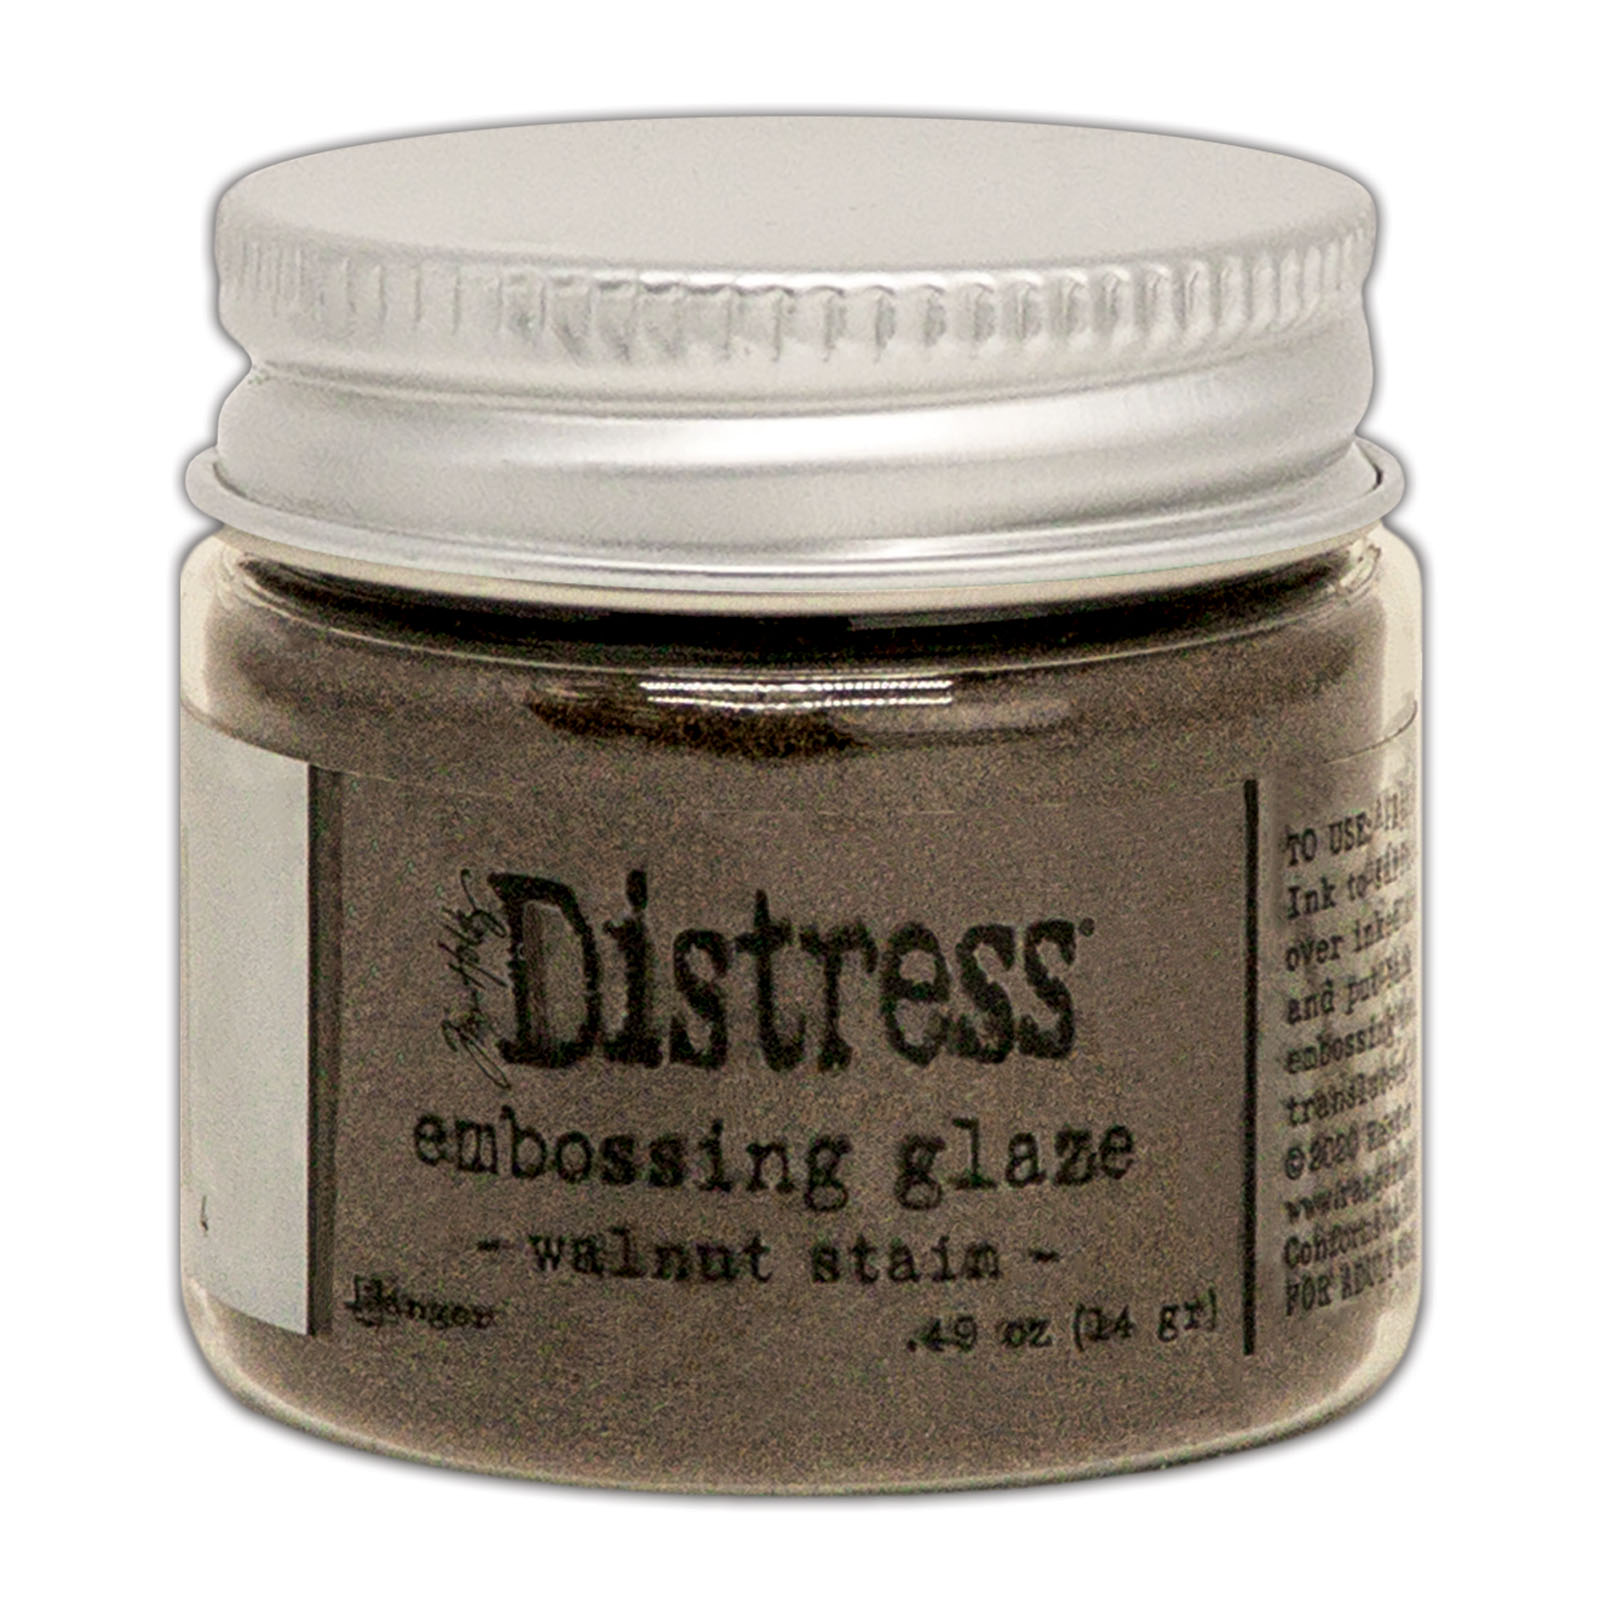 Ranger • Distress embossing glaze Walnut stain